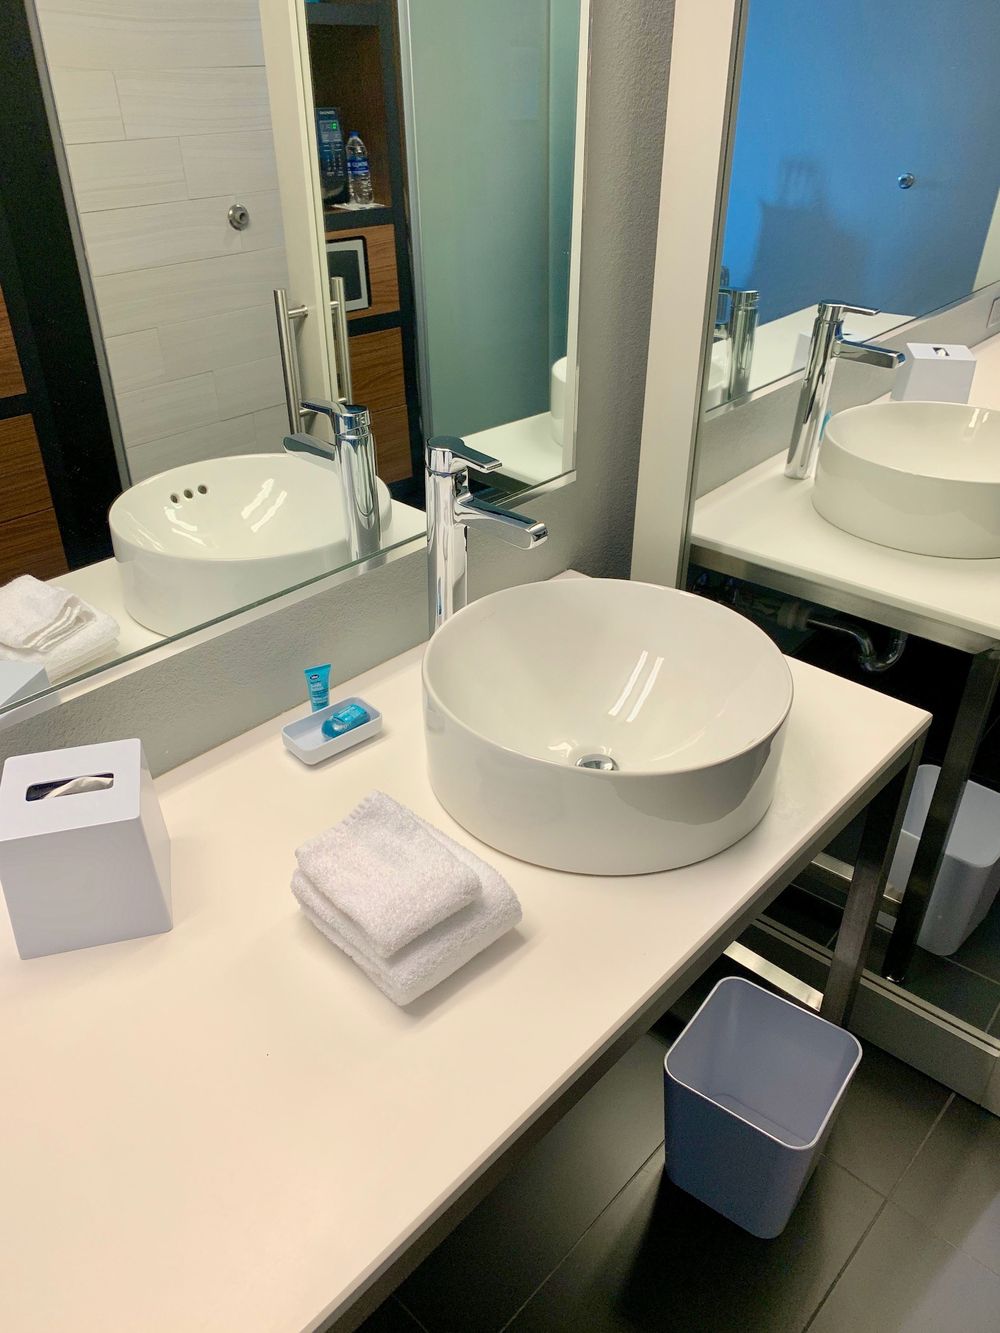 White vessel sink in bathroom of the Corpus Christi Aloft Hotel